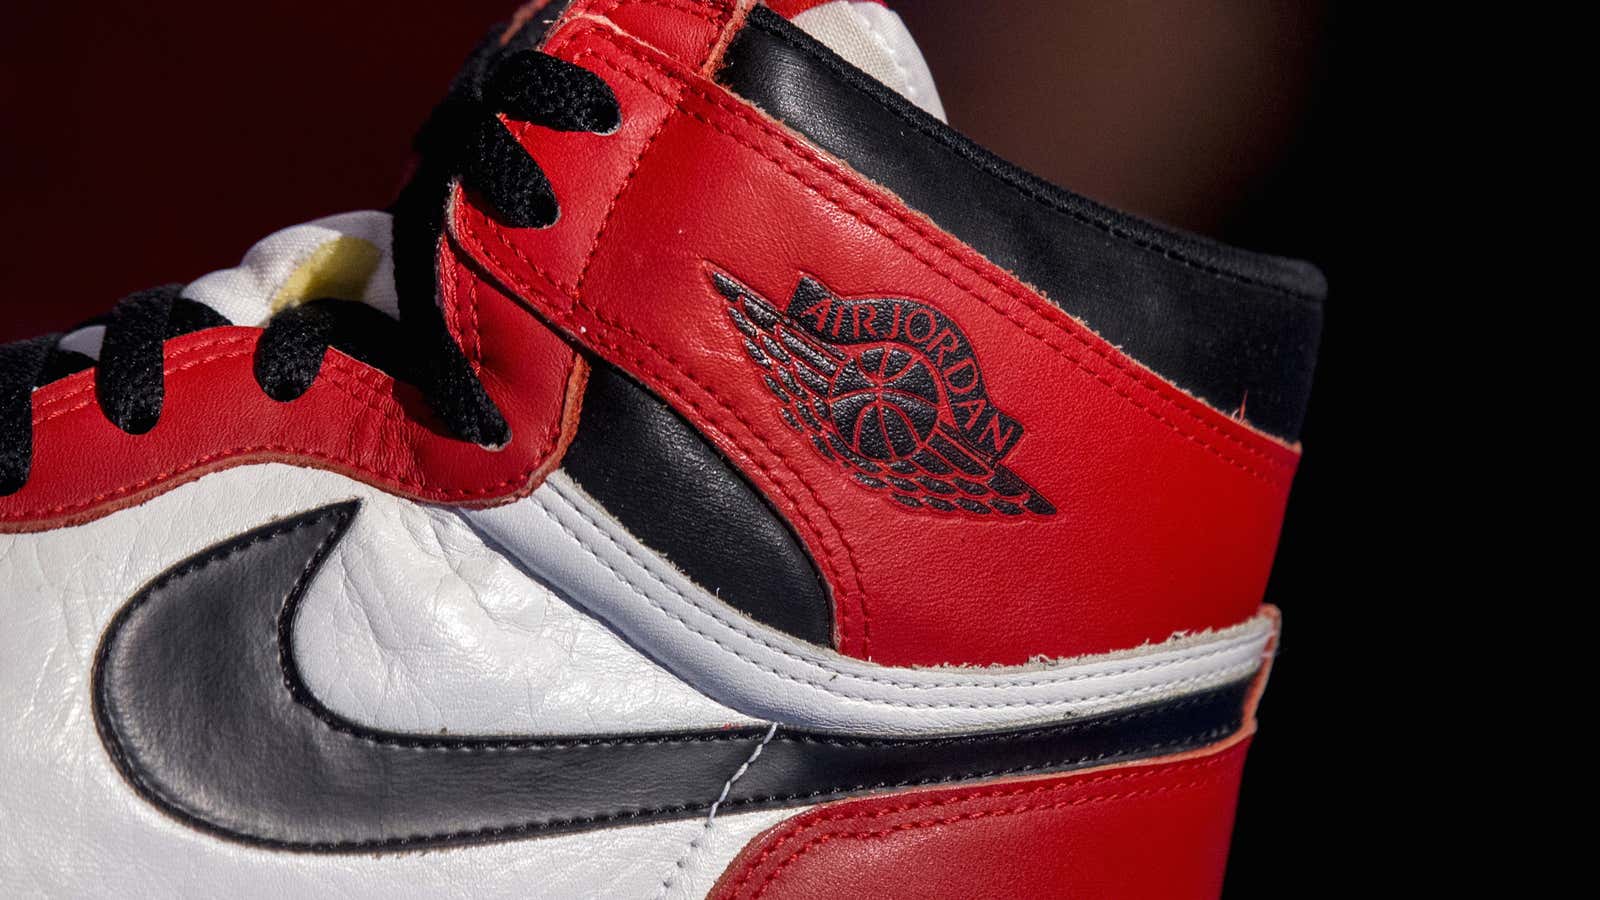 The 1984 Air Jordan sneaker is a foundational part of Nike’s rebel image.